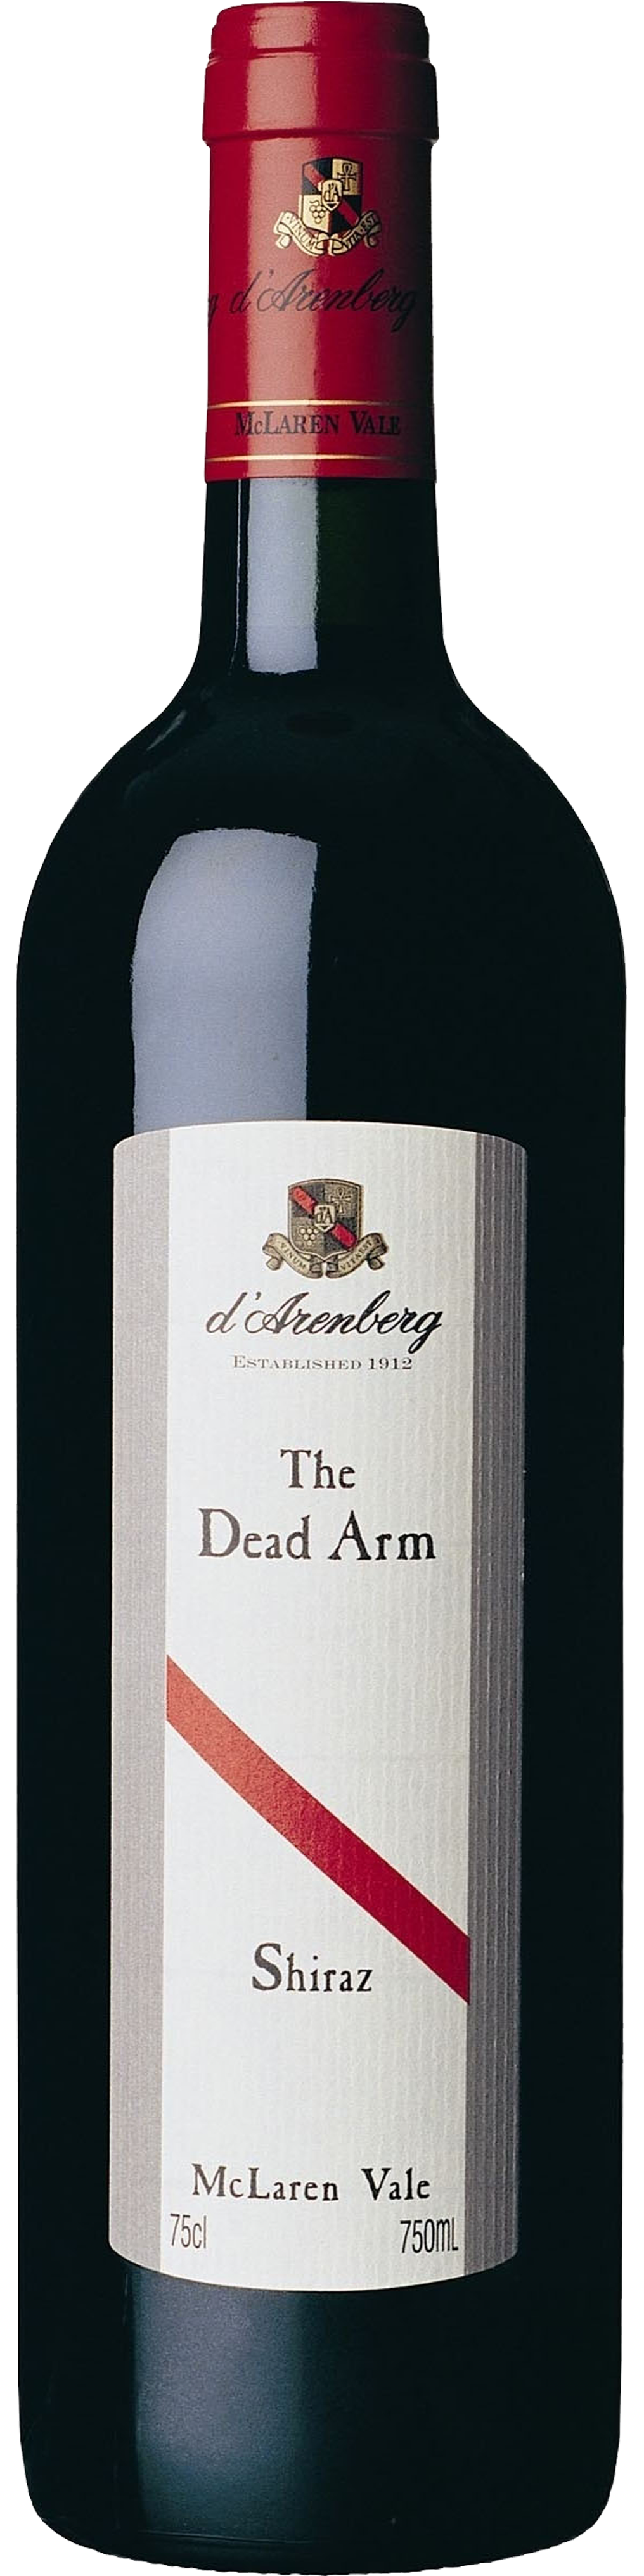 Bottle shot of 2007 The Dead Arm Shiraz